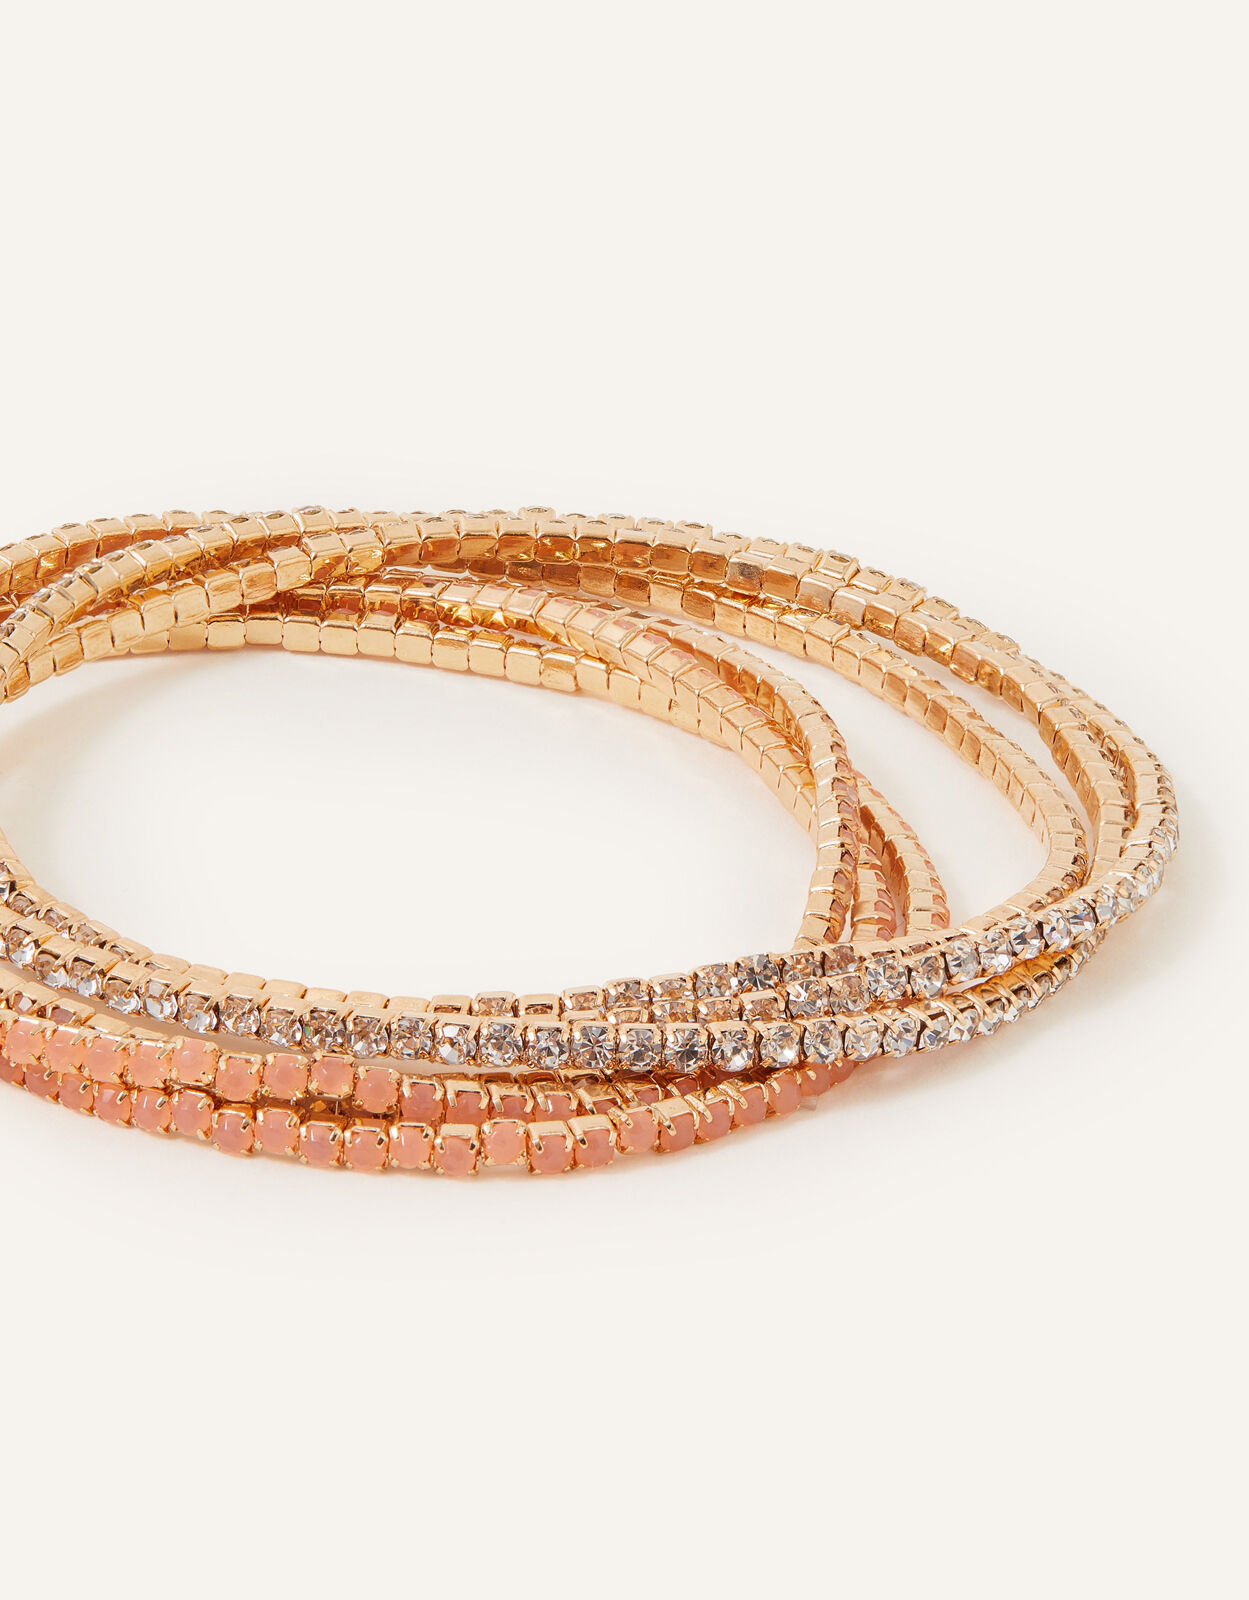 accessorize stunning bronze tone & pink bar chain charm bracelet | eBay